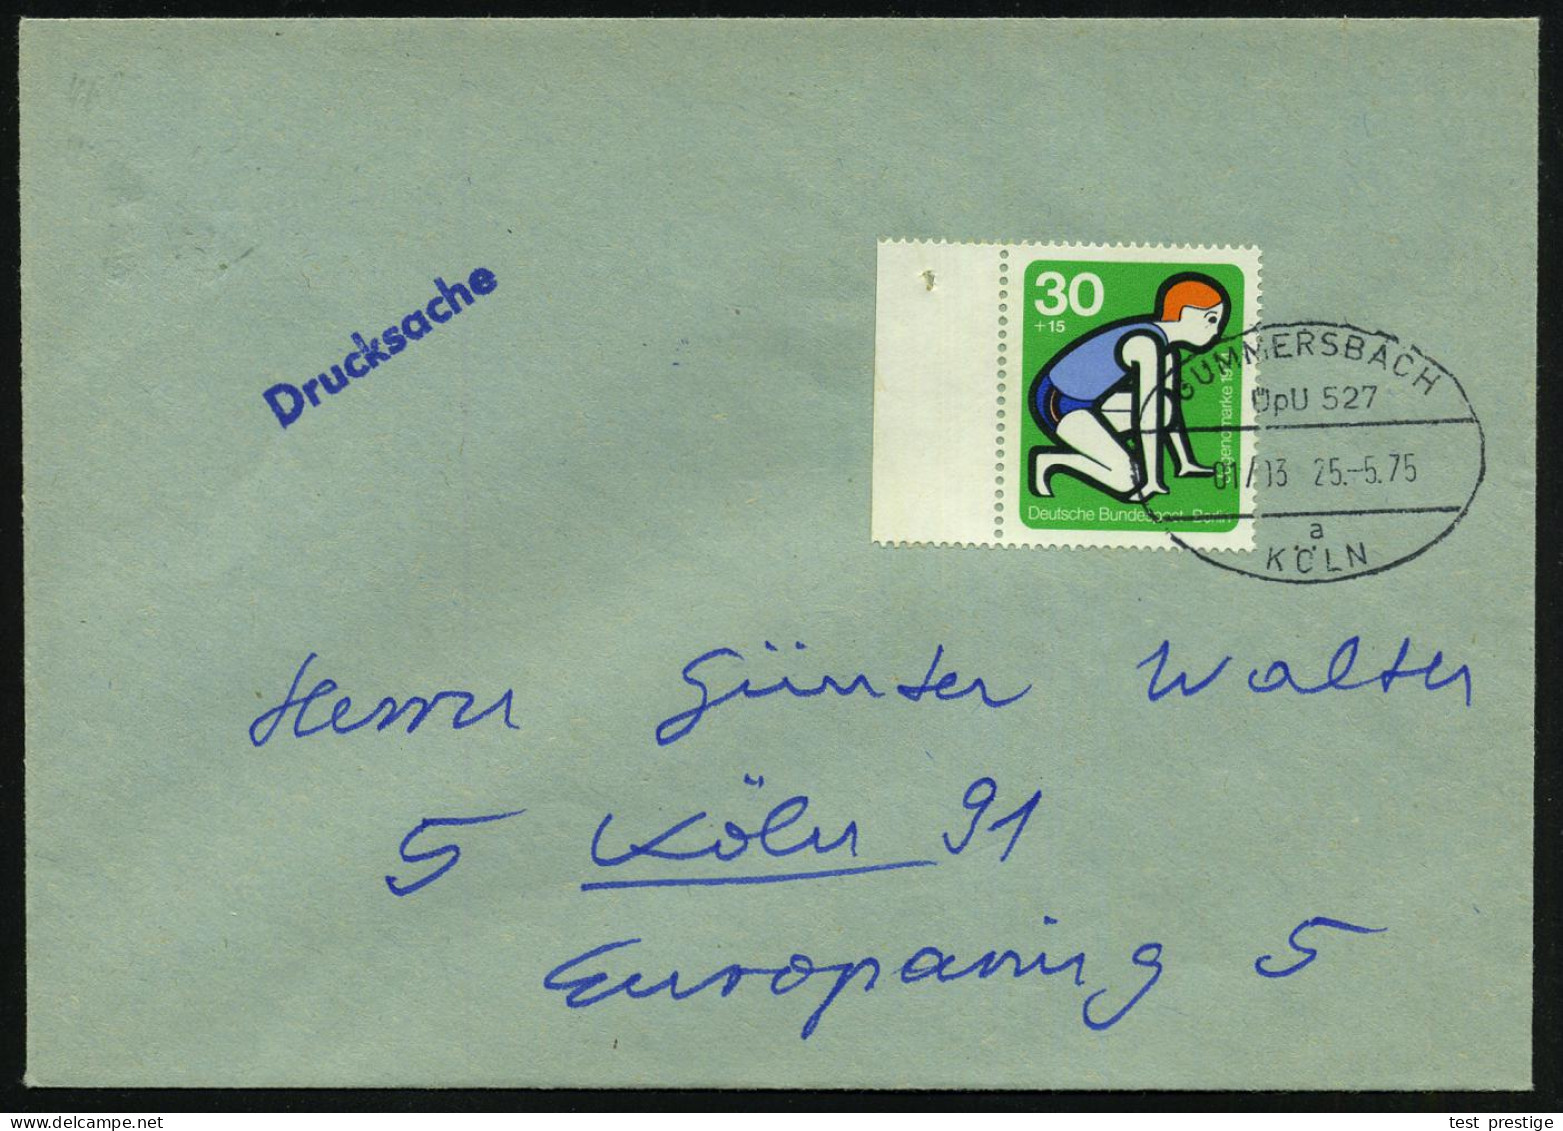 GUMMERSBACH/ ÜpU 527/ 01/ 03/ A/ KÖLN 1975 (25.5.) Oval-Steg = Mobiles Postamt Im Überland-Postomnibus , Klar Gest. Inl. - Voitures